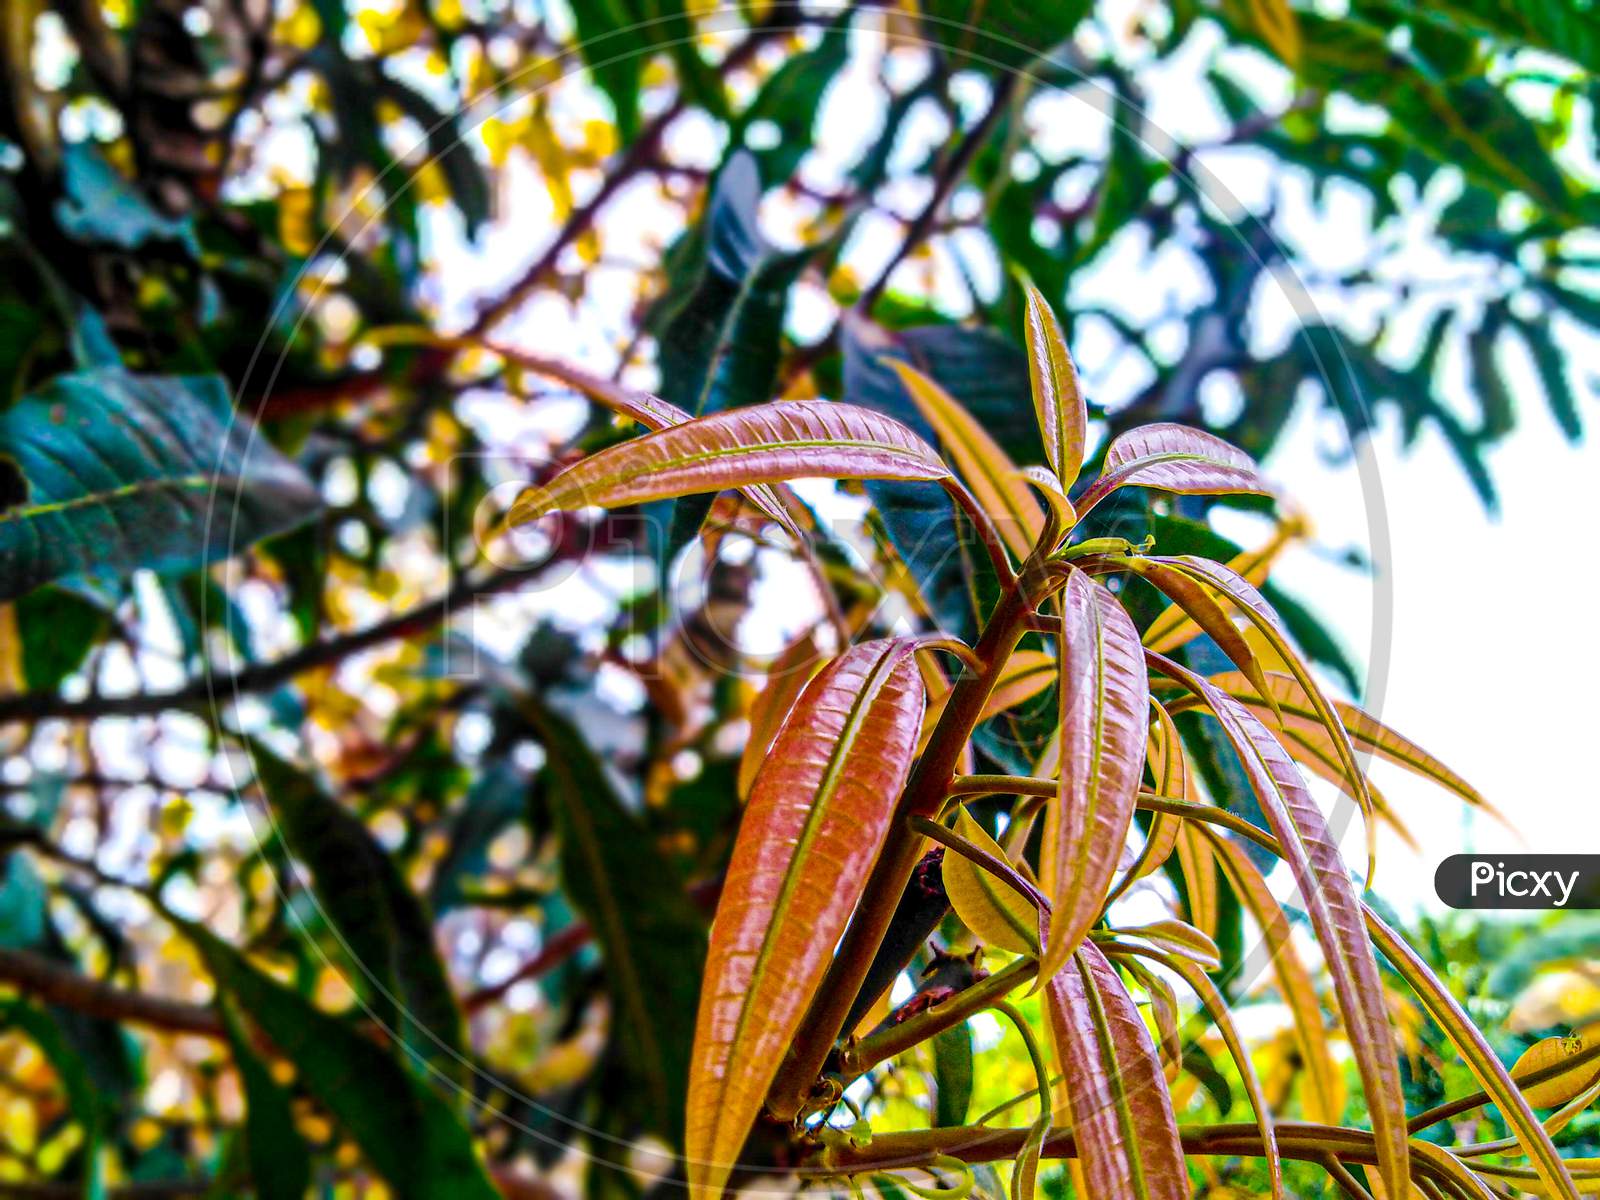 Mango leaf capture in a portrait mode